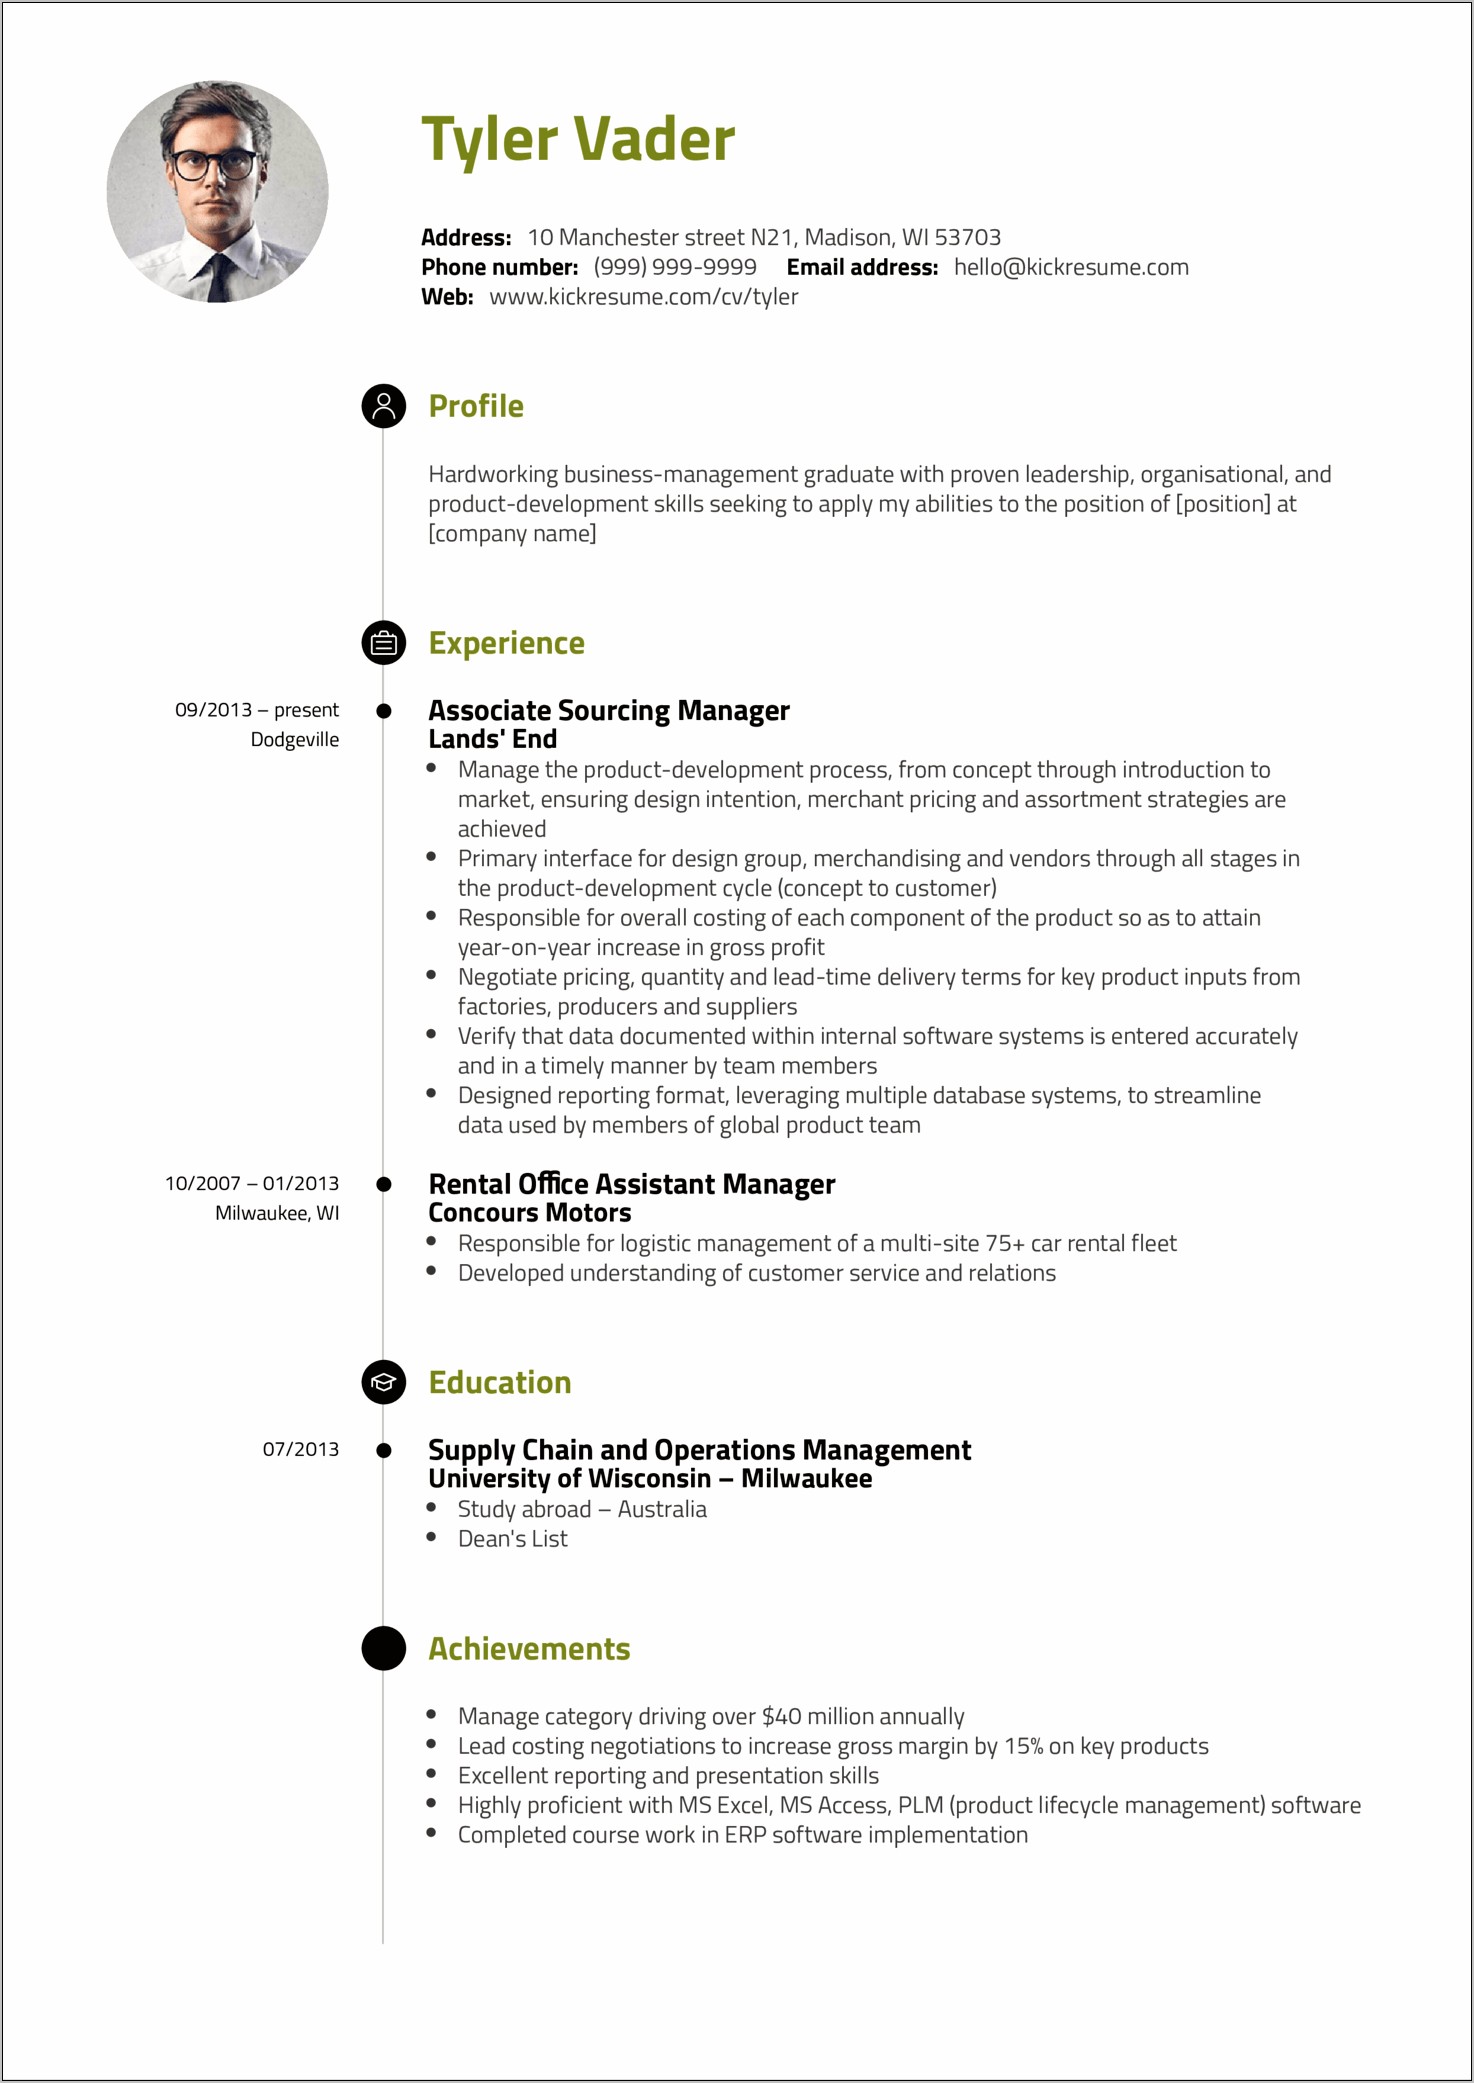 Resume Example With Company Description